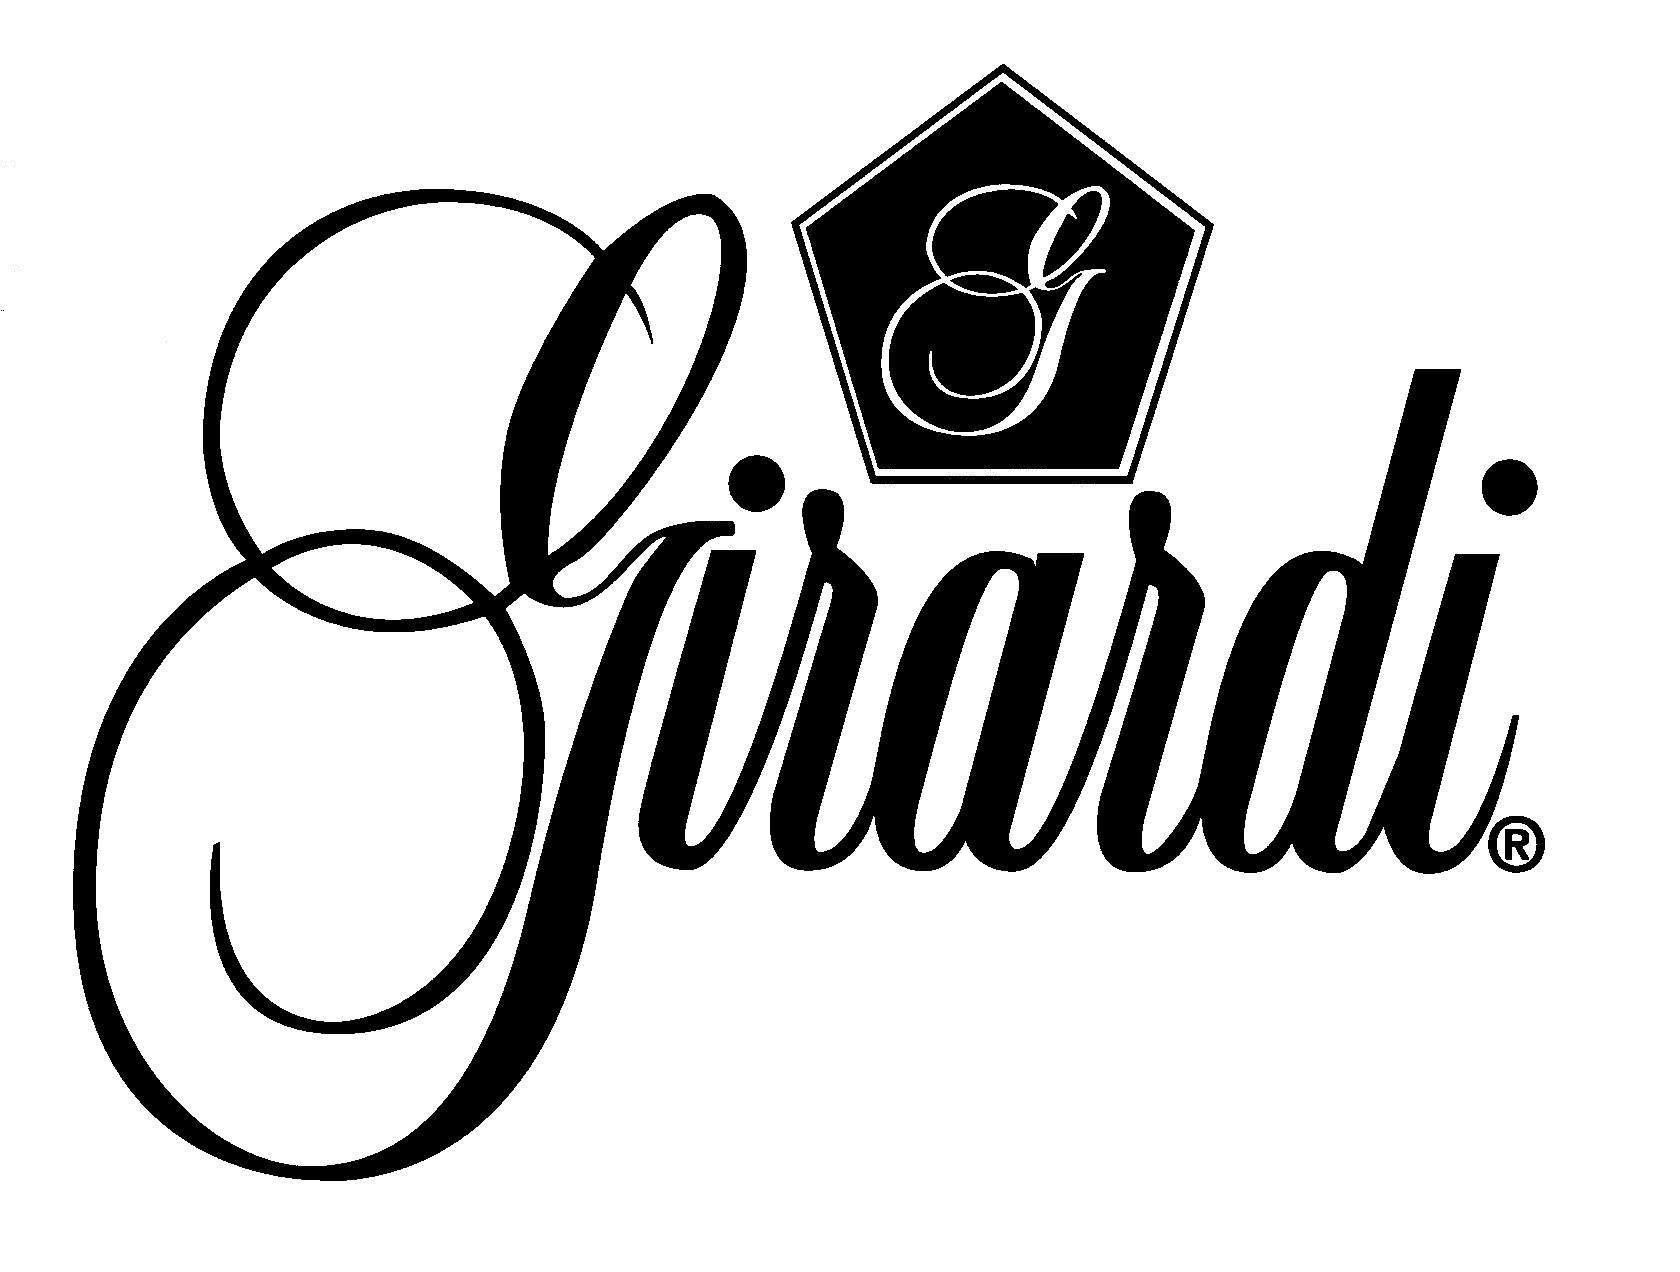 Girardi logo